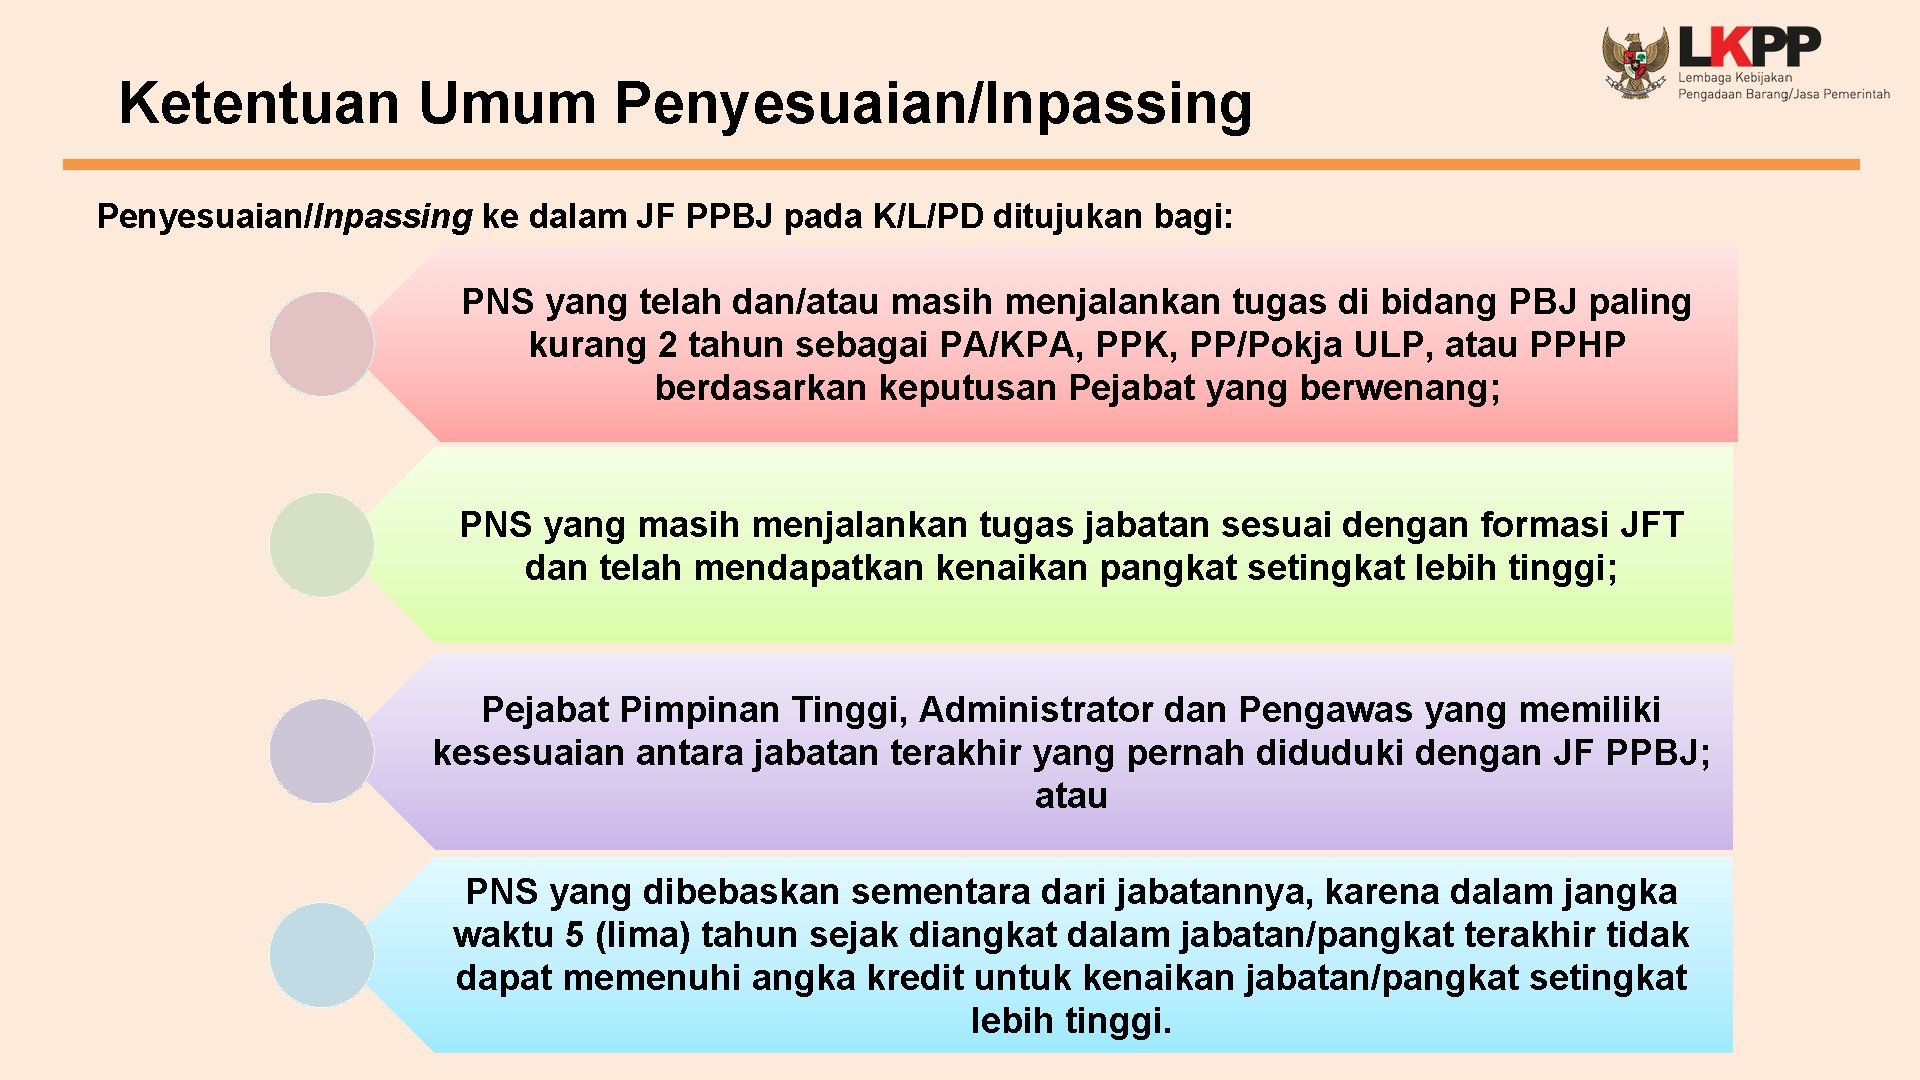 Ketentuan Umum Penyesuaian/Inpassing ke dalam JF PPBJ pada K/L/PD ditujukan bagi: PNS yang telah